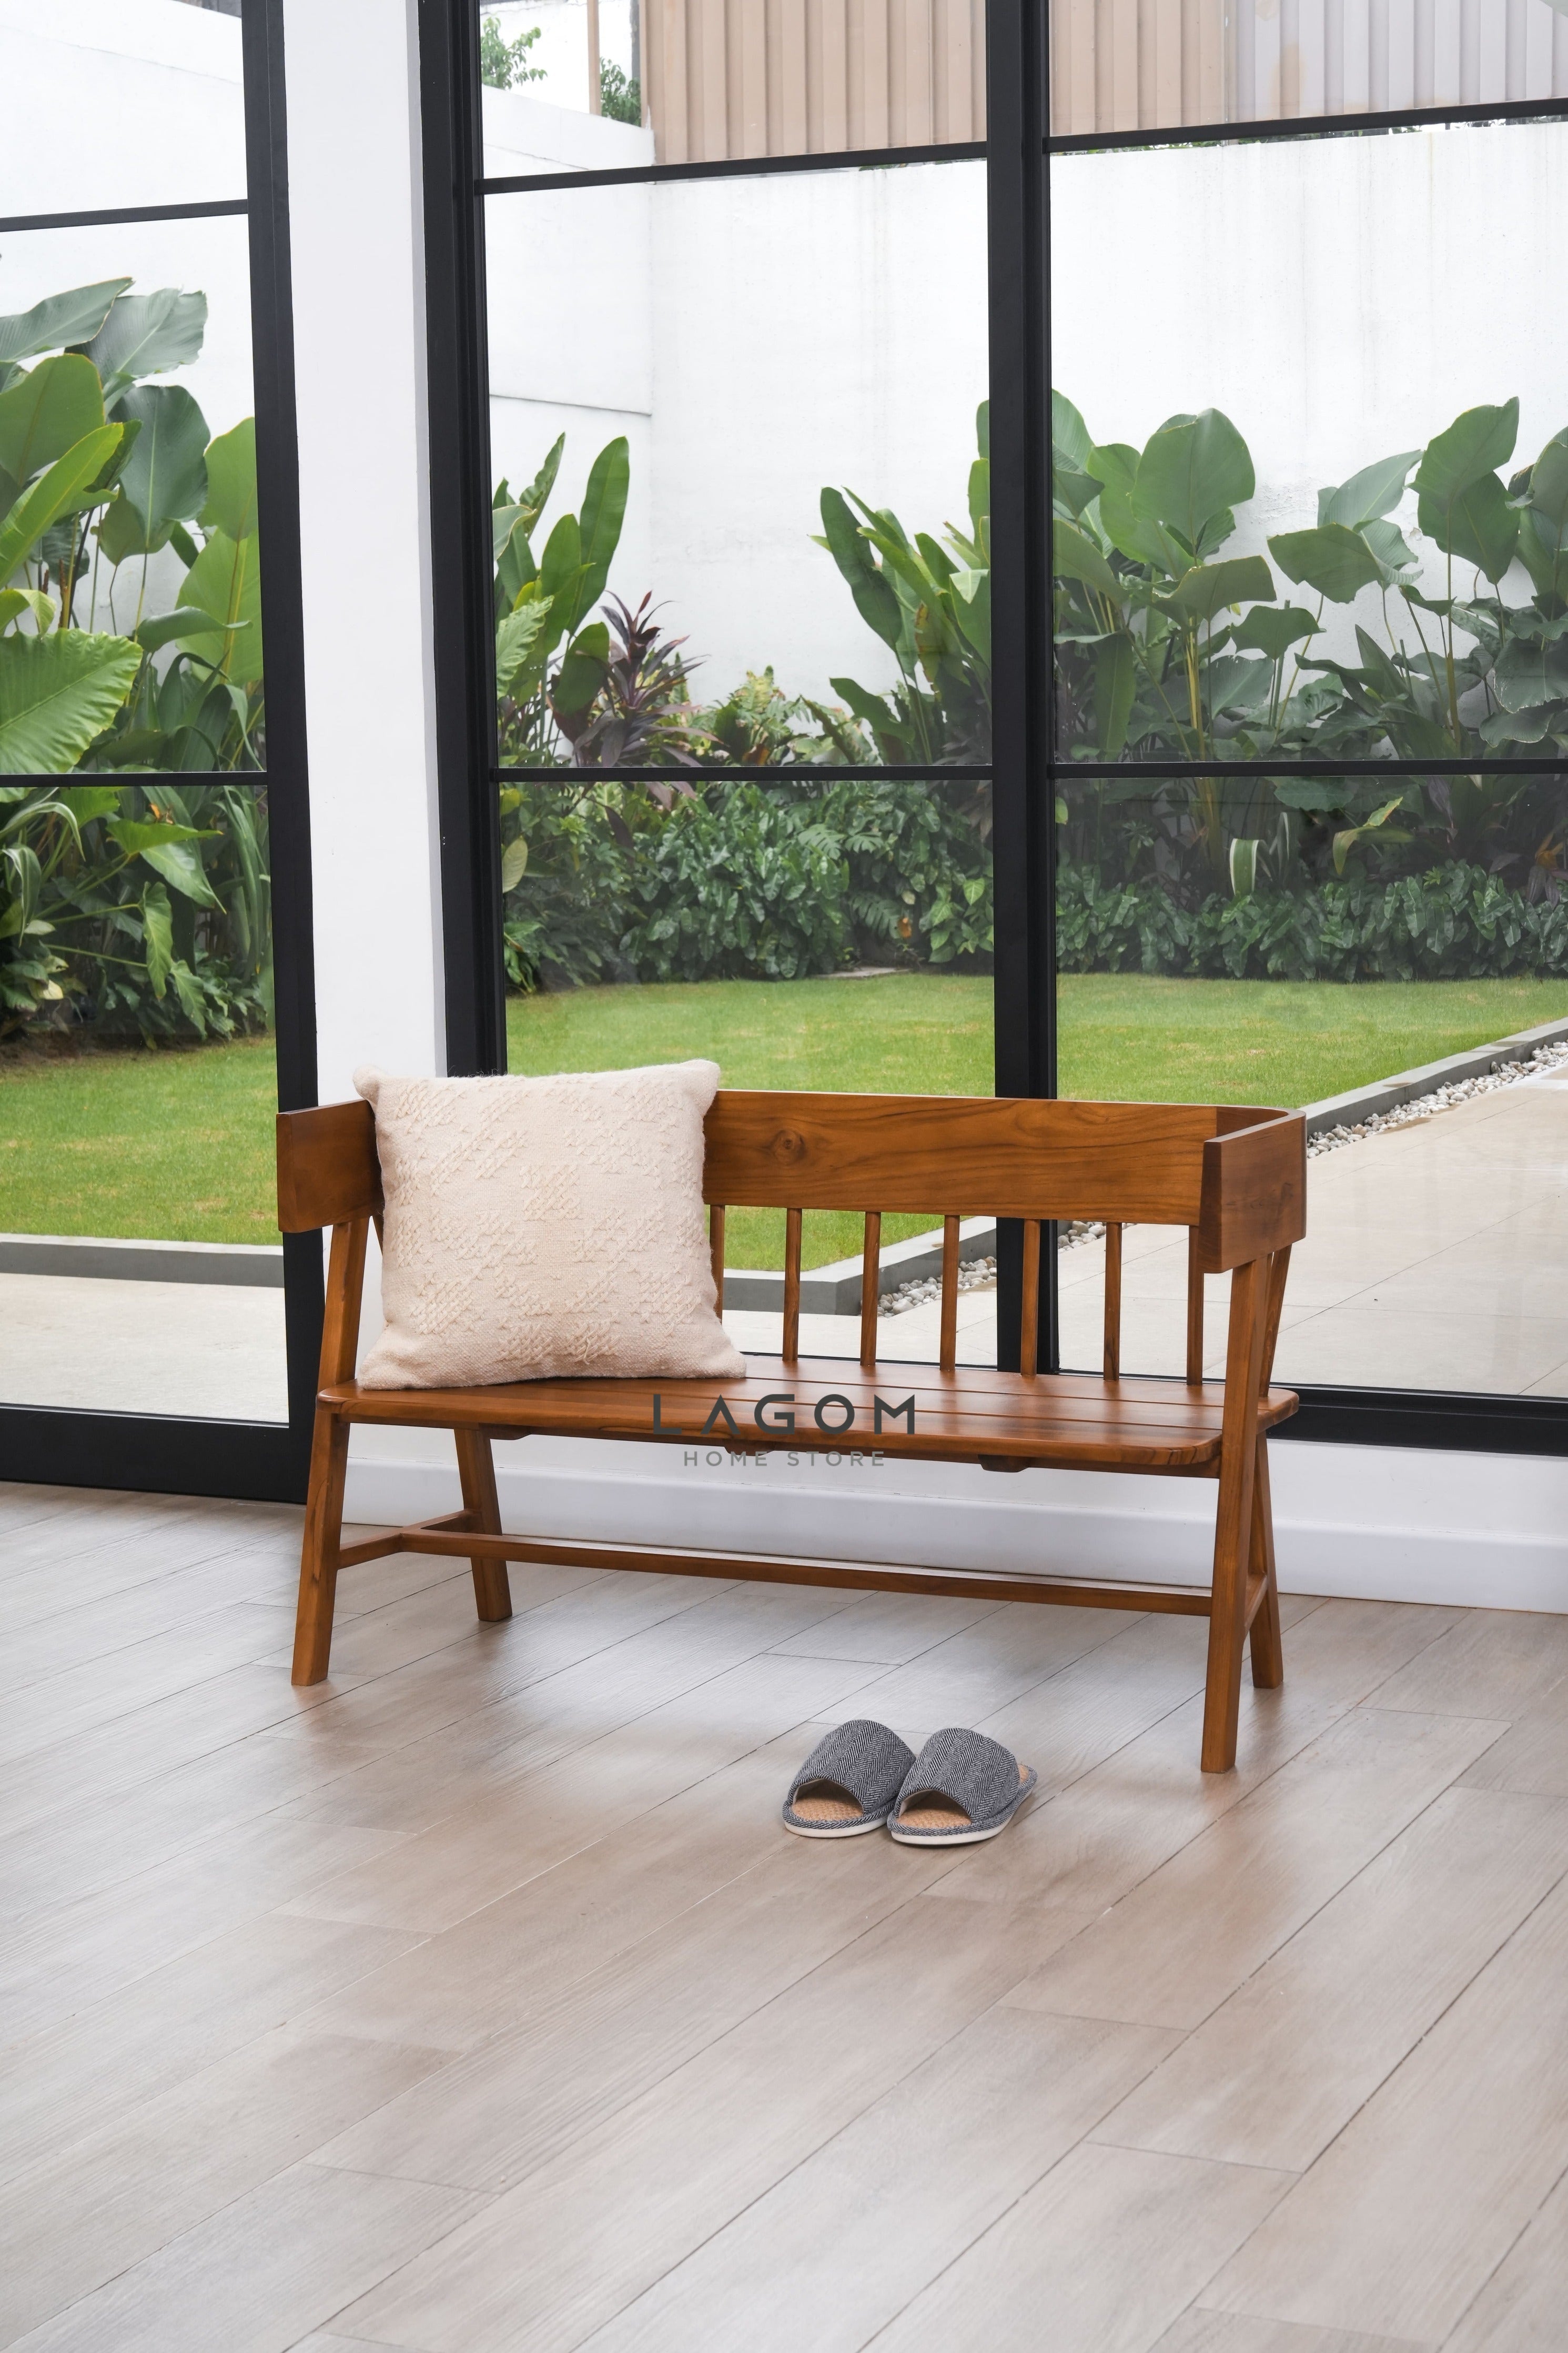 Bangku Taman Unik dari Kayu Jati Solid Bench Seat Lagom Home Store Jati Furnitur Teak Furniture Jakarta